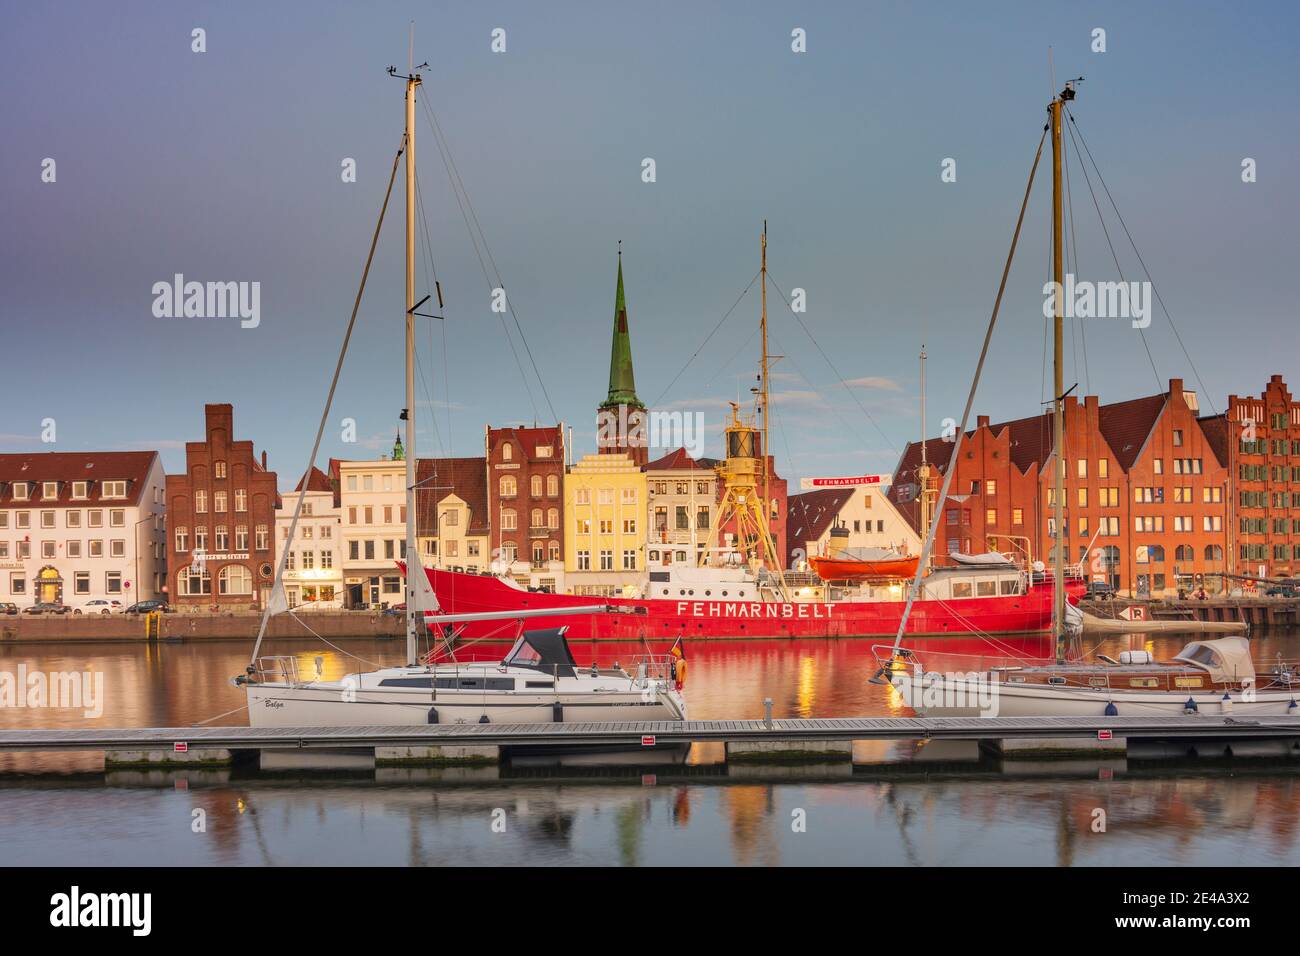 Lübeck, fiume Untertrave, nave museo Feuerschiff (Lightship) Fehmarnbelt, vista della città vecchia, chiesa Jakobikirche, Ostsee (Mar Baltico), Schleswig-Holstein, Germania Foto Stock